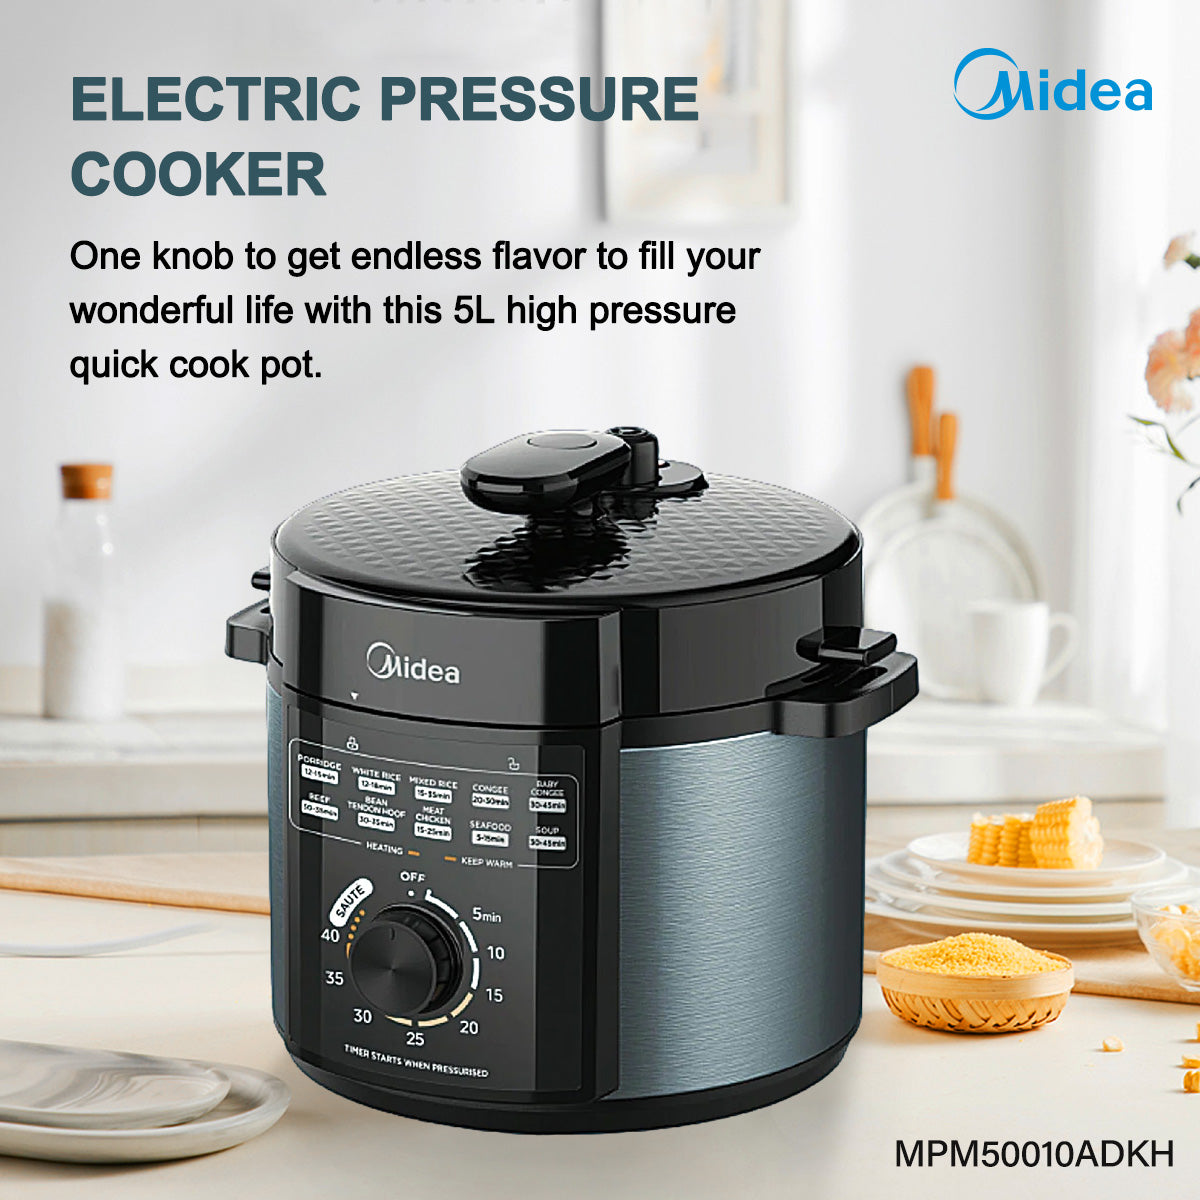 Midea 5L Pressure Cooker 24-Hour Pre-Set Timer